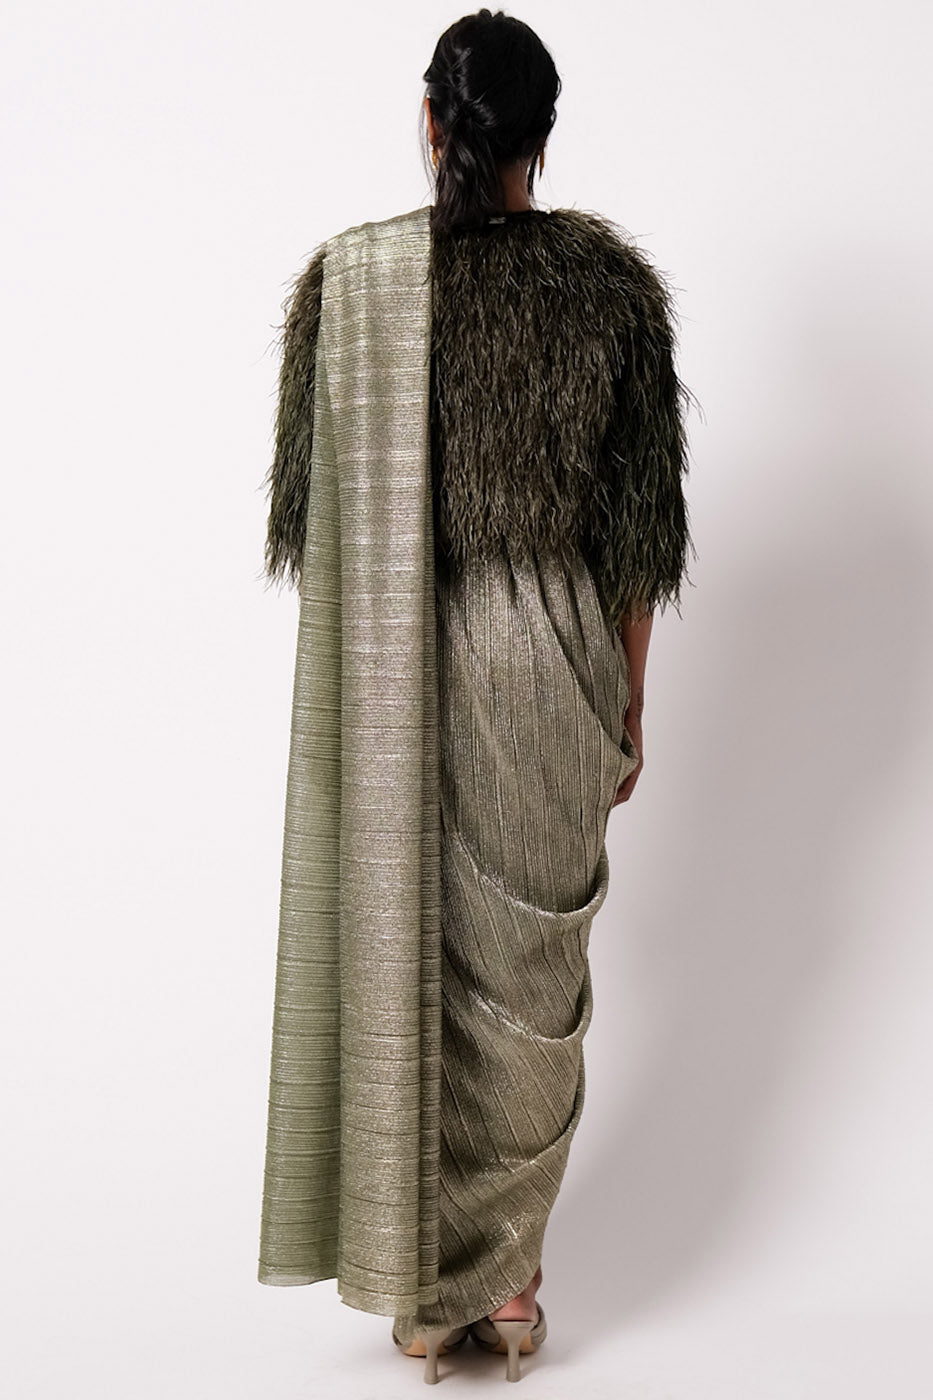 Feather Jacket with AQ Sari